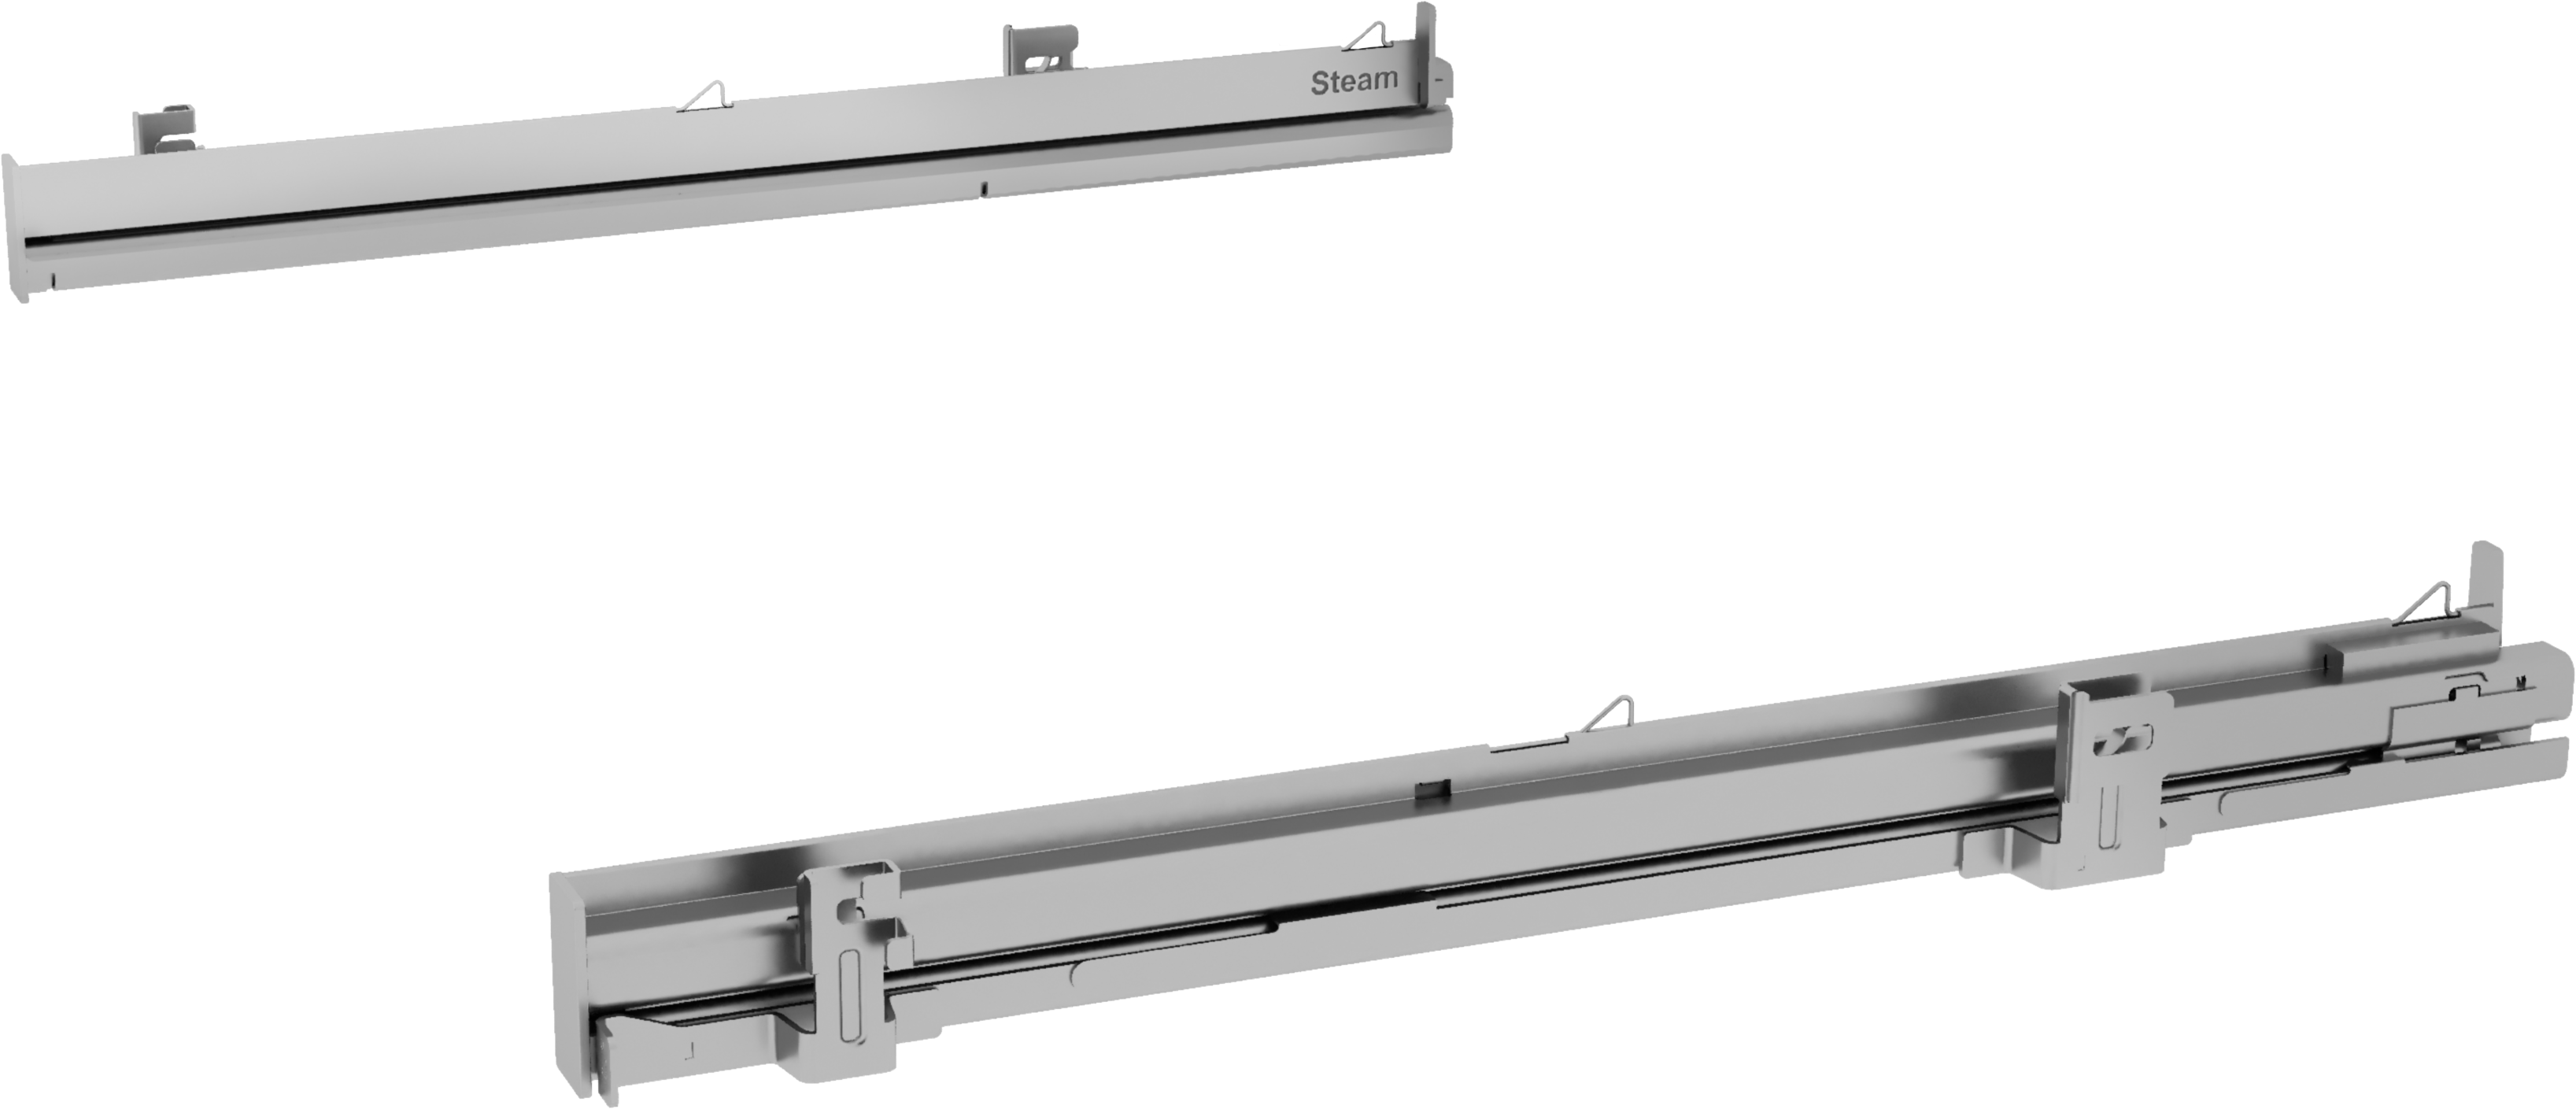 Clip rail full extension, Stainless steel, HEZ638D00